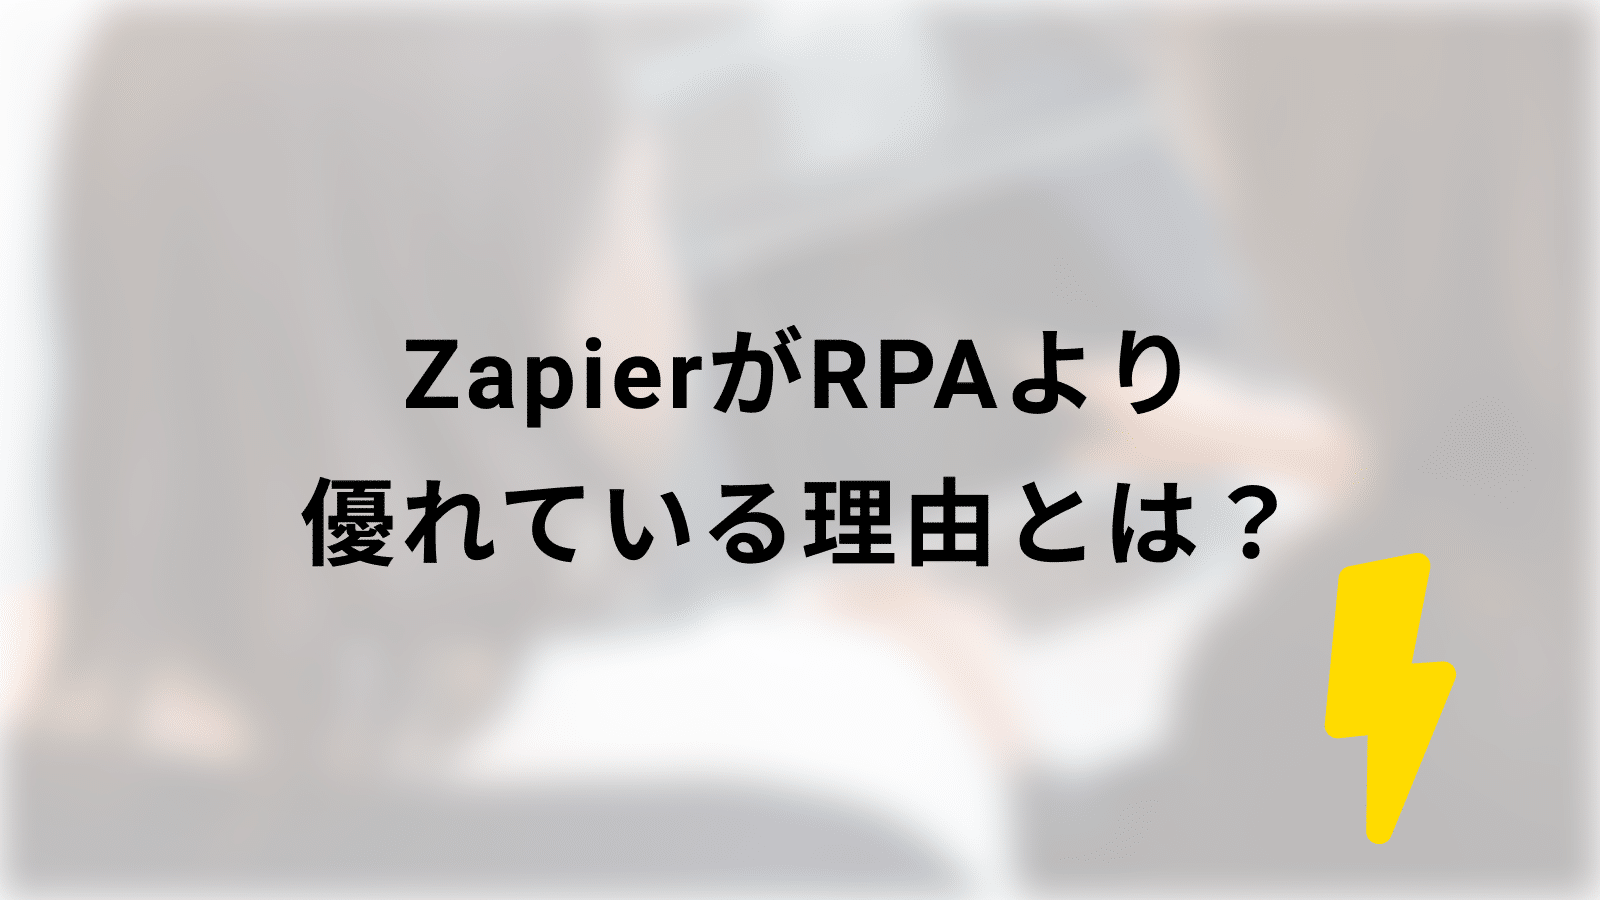 ZapierがRPAより優れている理由とは？